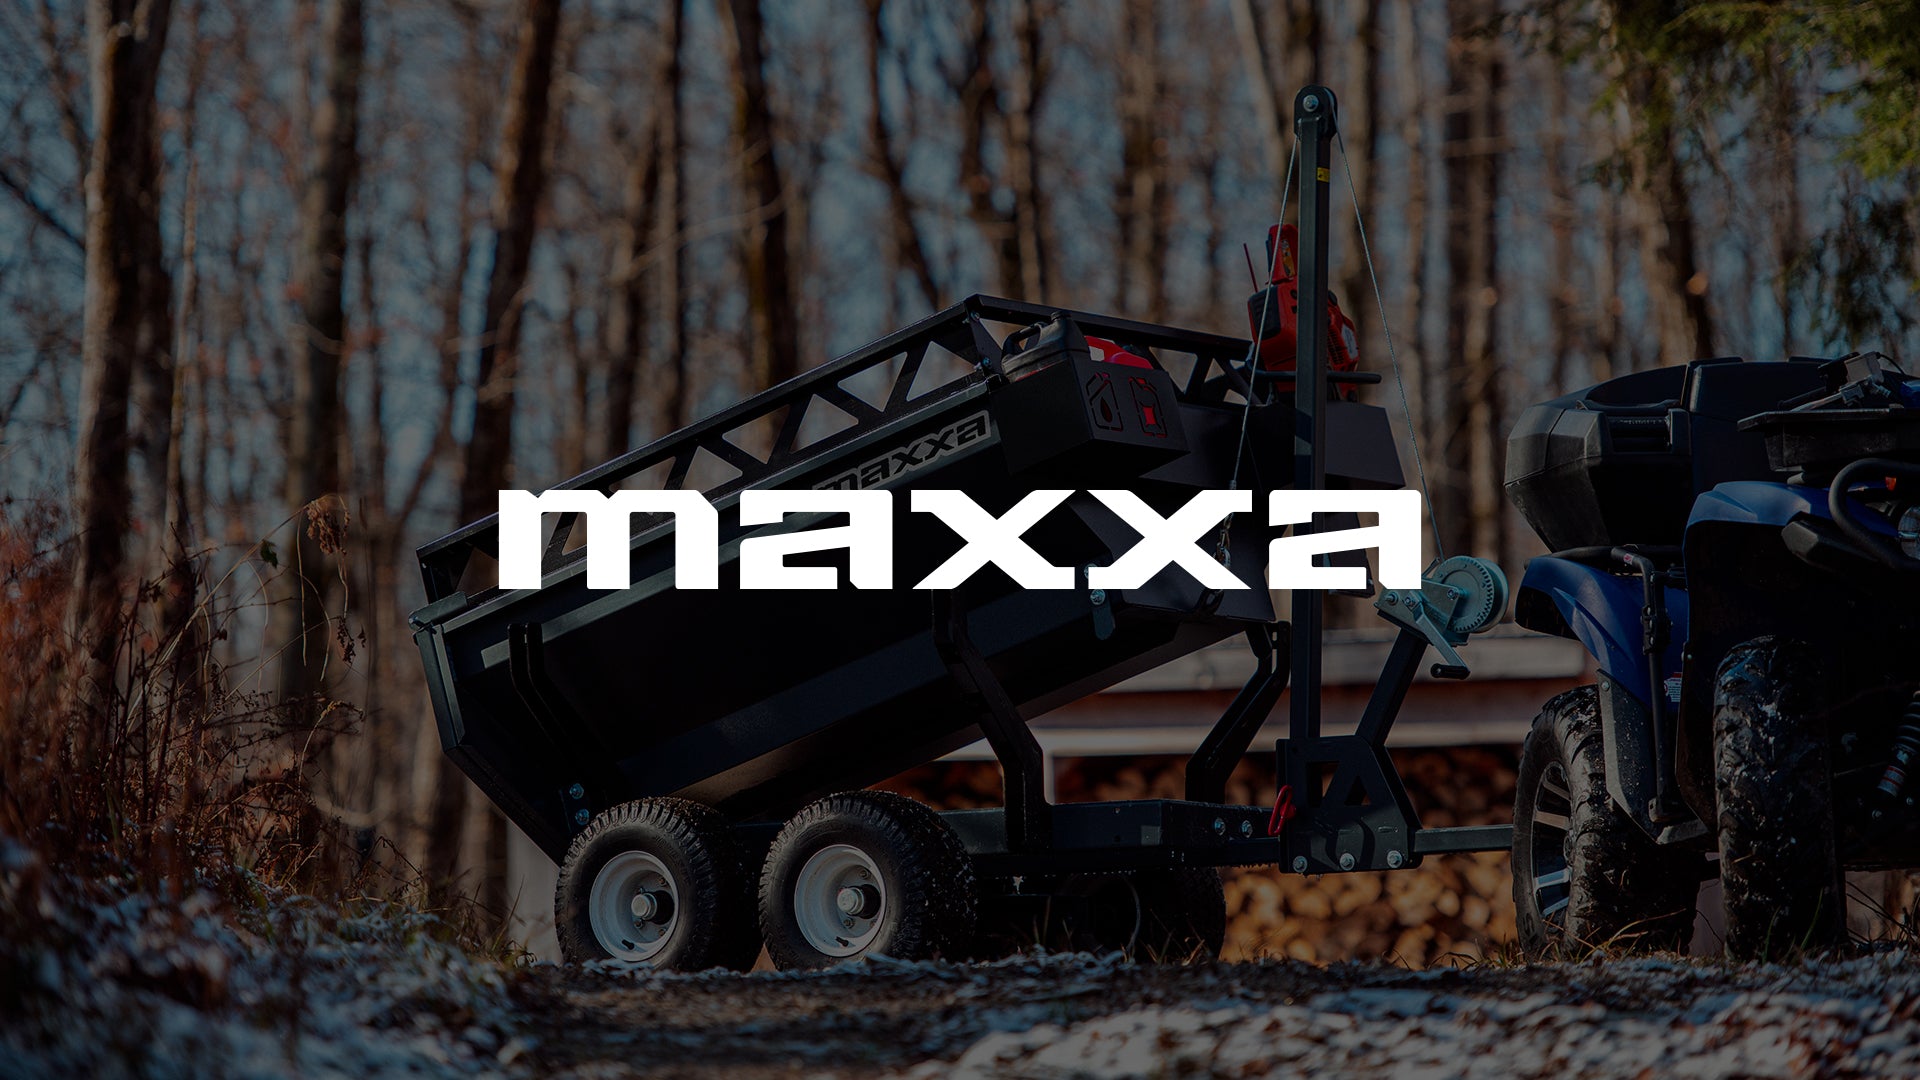 Remorque utilitaire Maxxa MXR46 fondu en arrière plan avec le logo Maxxa en avant plan